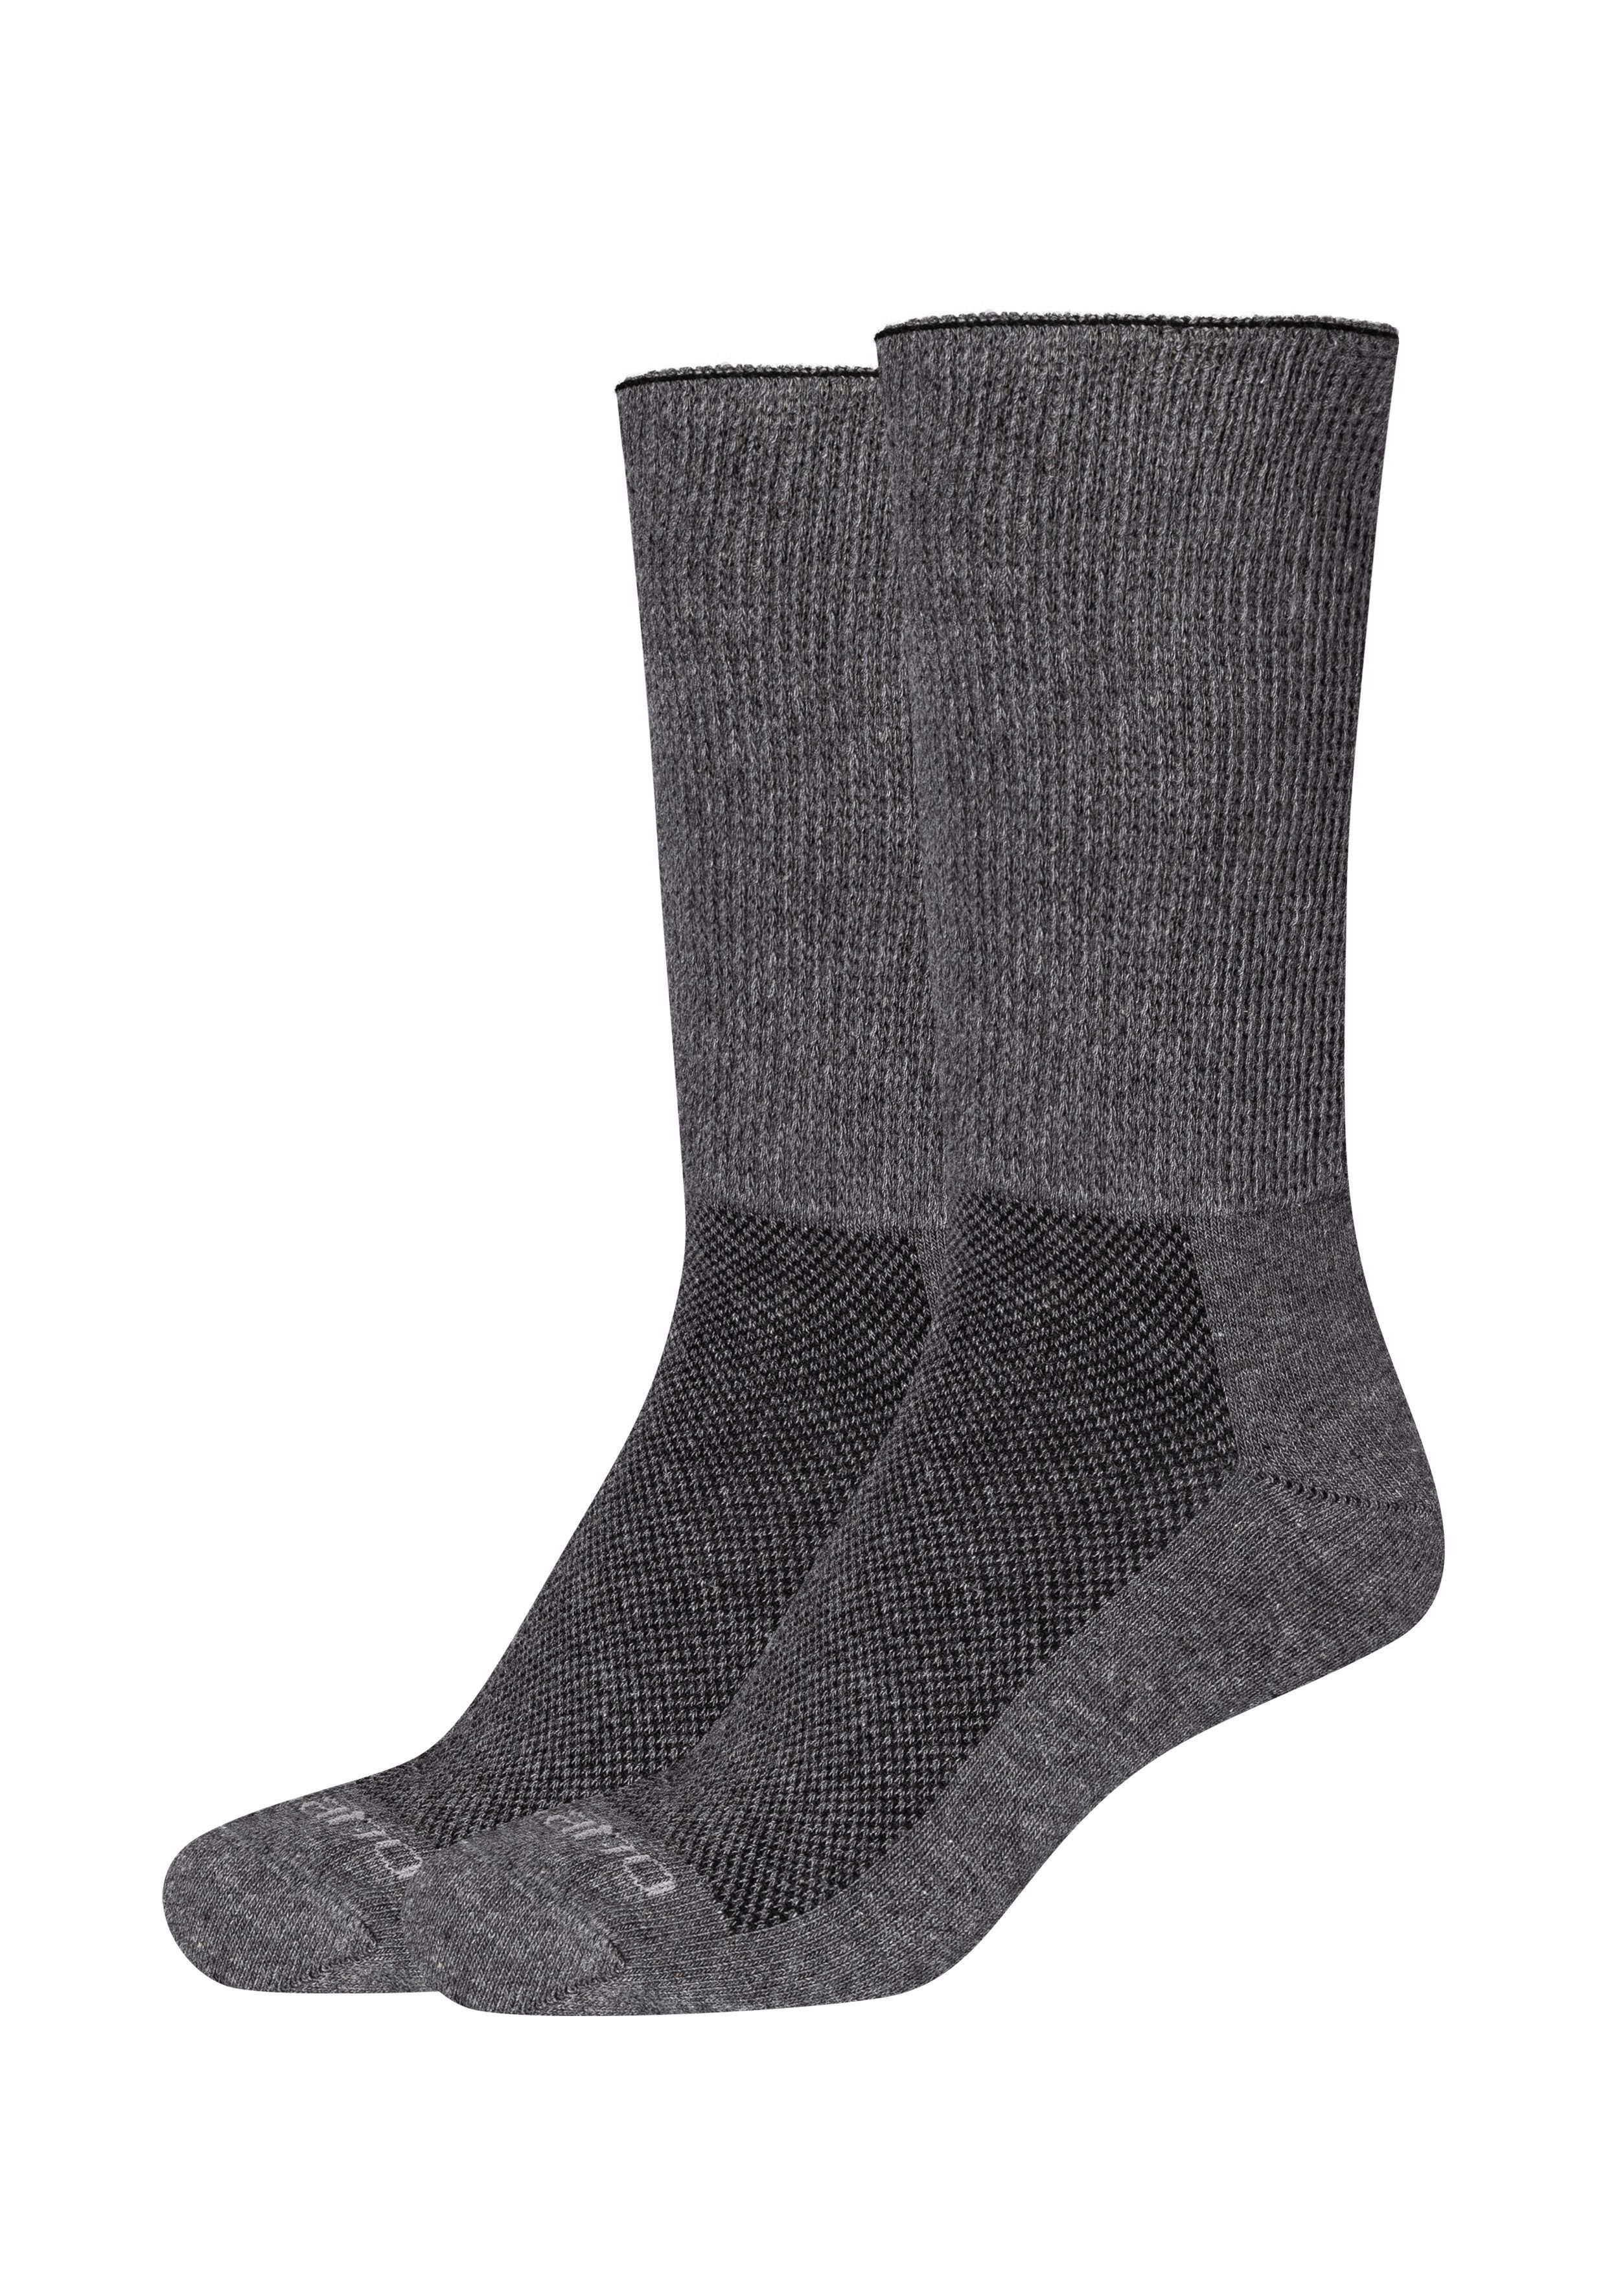 Camano Socken anthracite